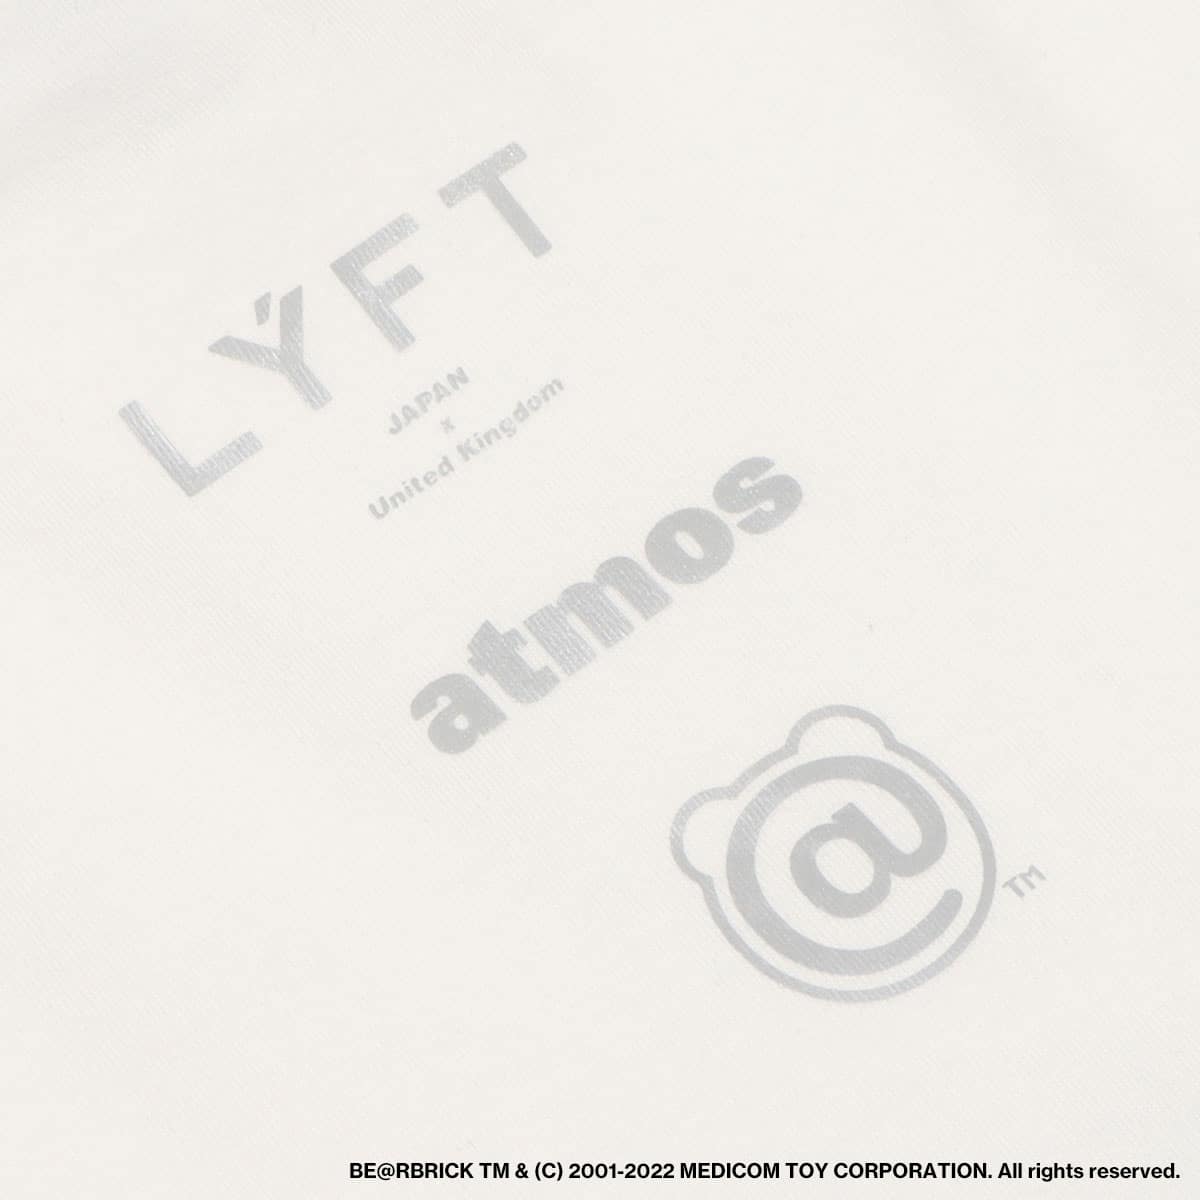 LYFT × BE@RBRICK × atmos Big T-Shirt WHITE 22SU-I